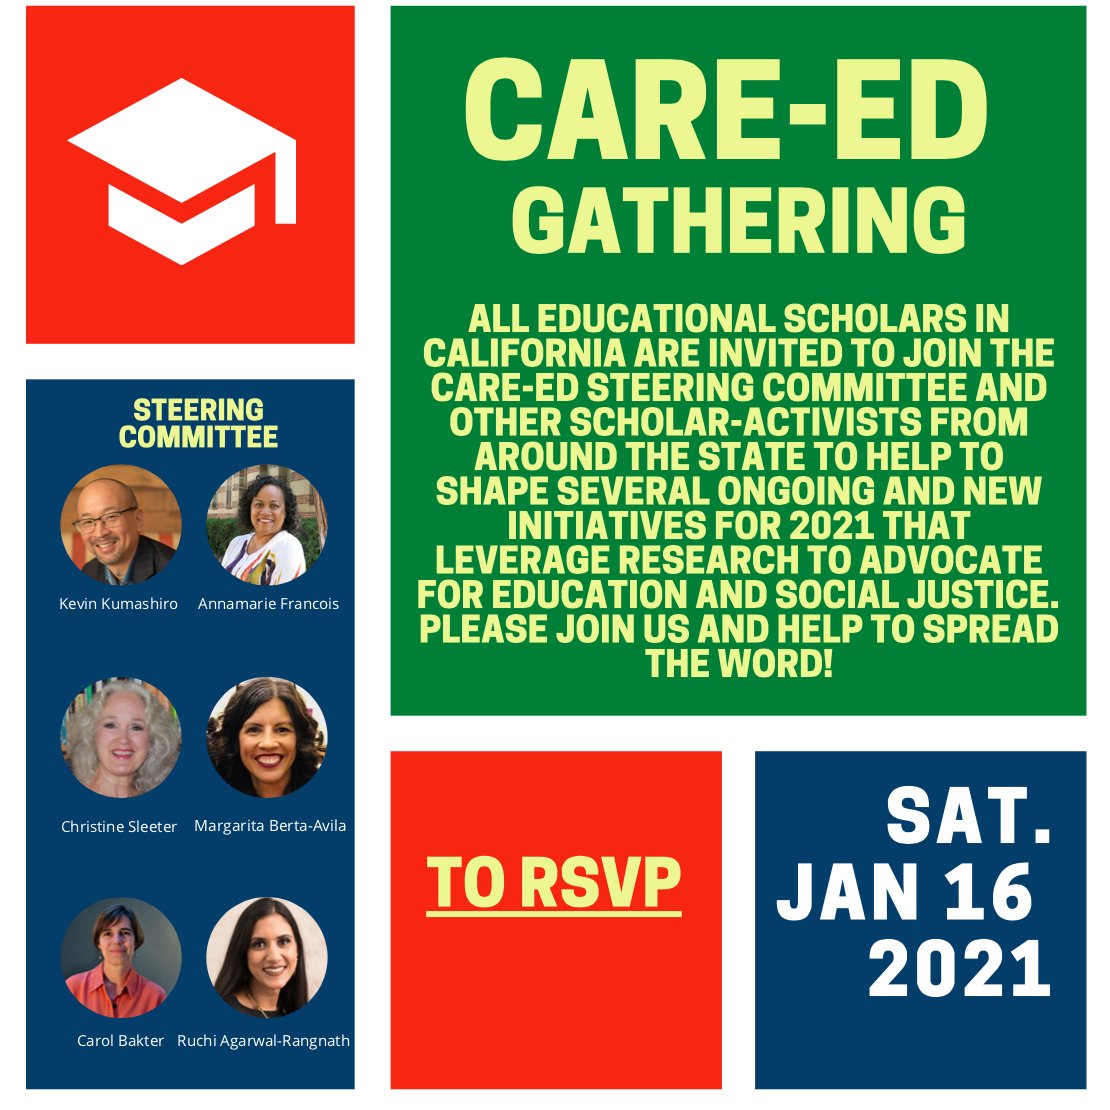 Who's joining us on Saturday @CARE_ED gathering? #scholaractivism #educationadvocacy #criticaleducators care-ed.org